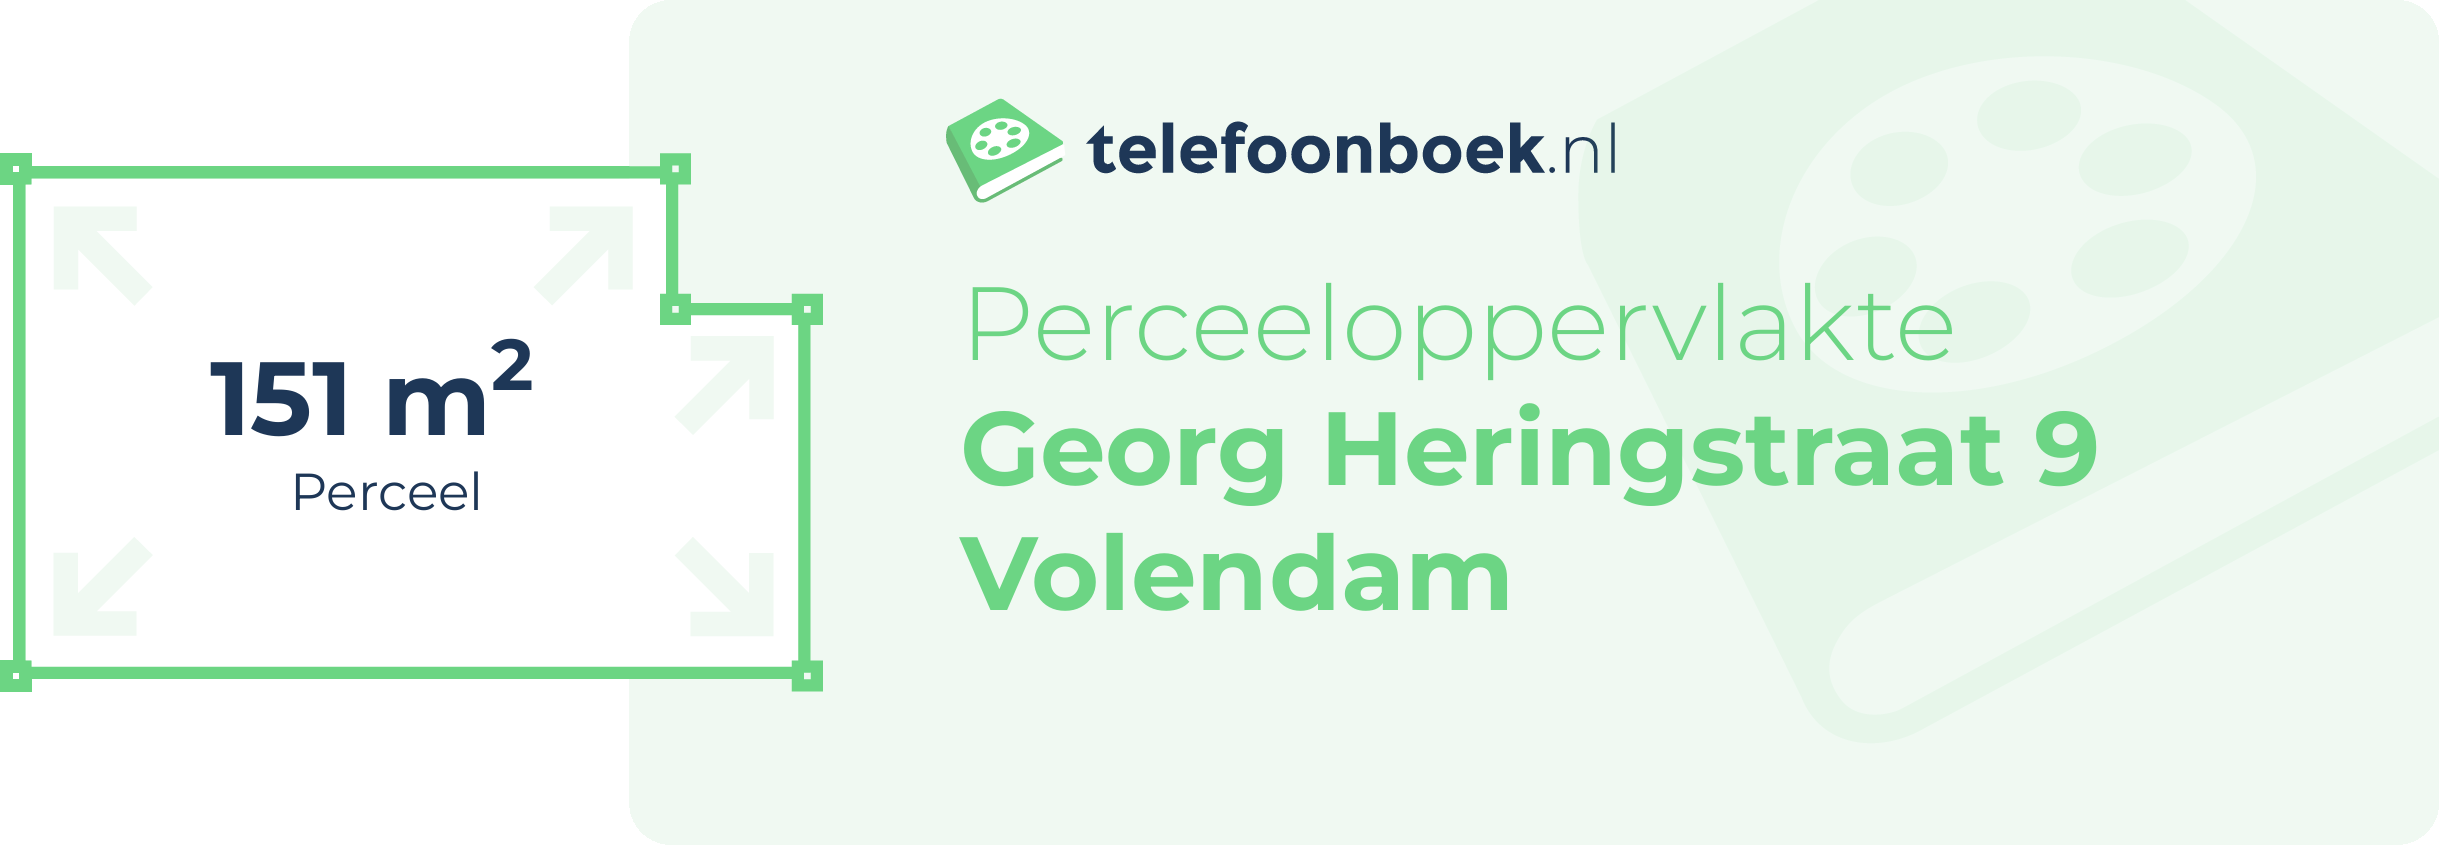 Perceeloppervlakte Georg Heringstraat 9 Volendam